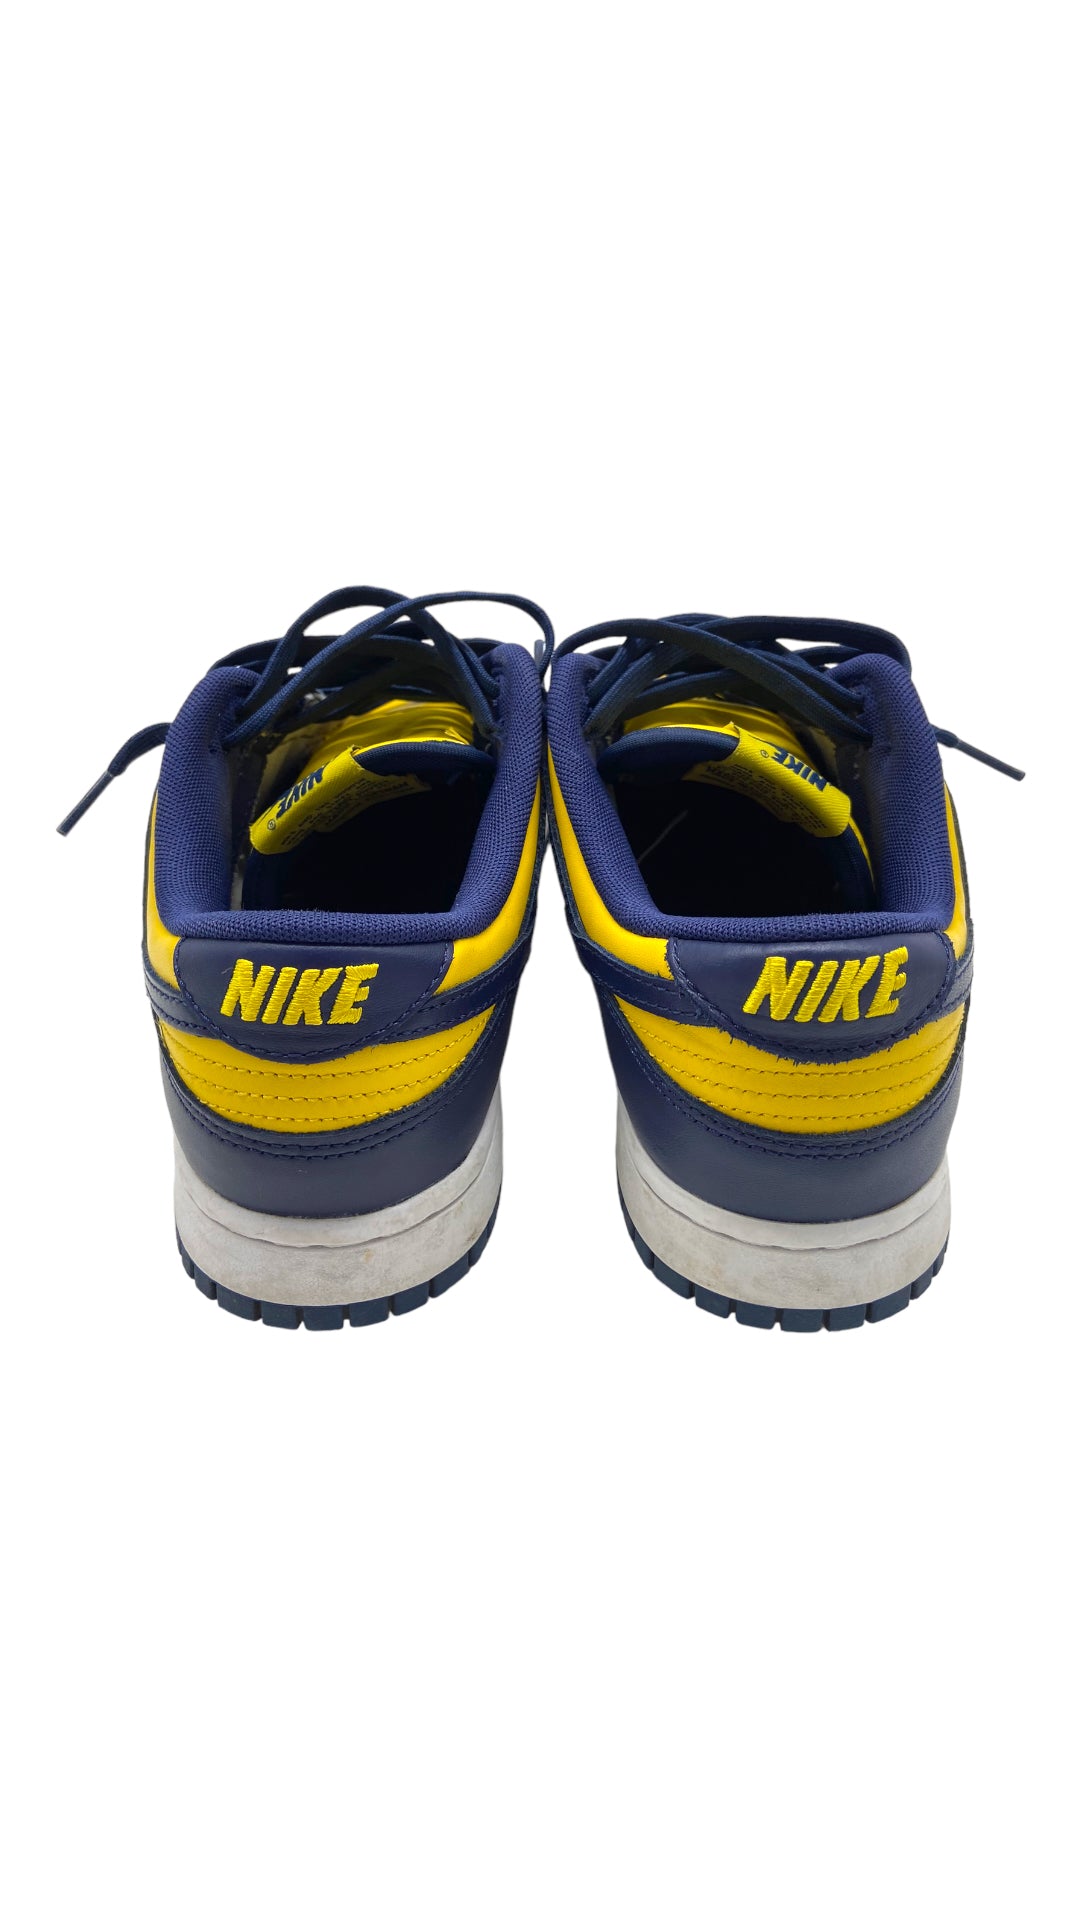 Preowned Nike Dunk Low Michigan (2021) Sz 9.5